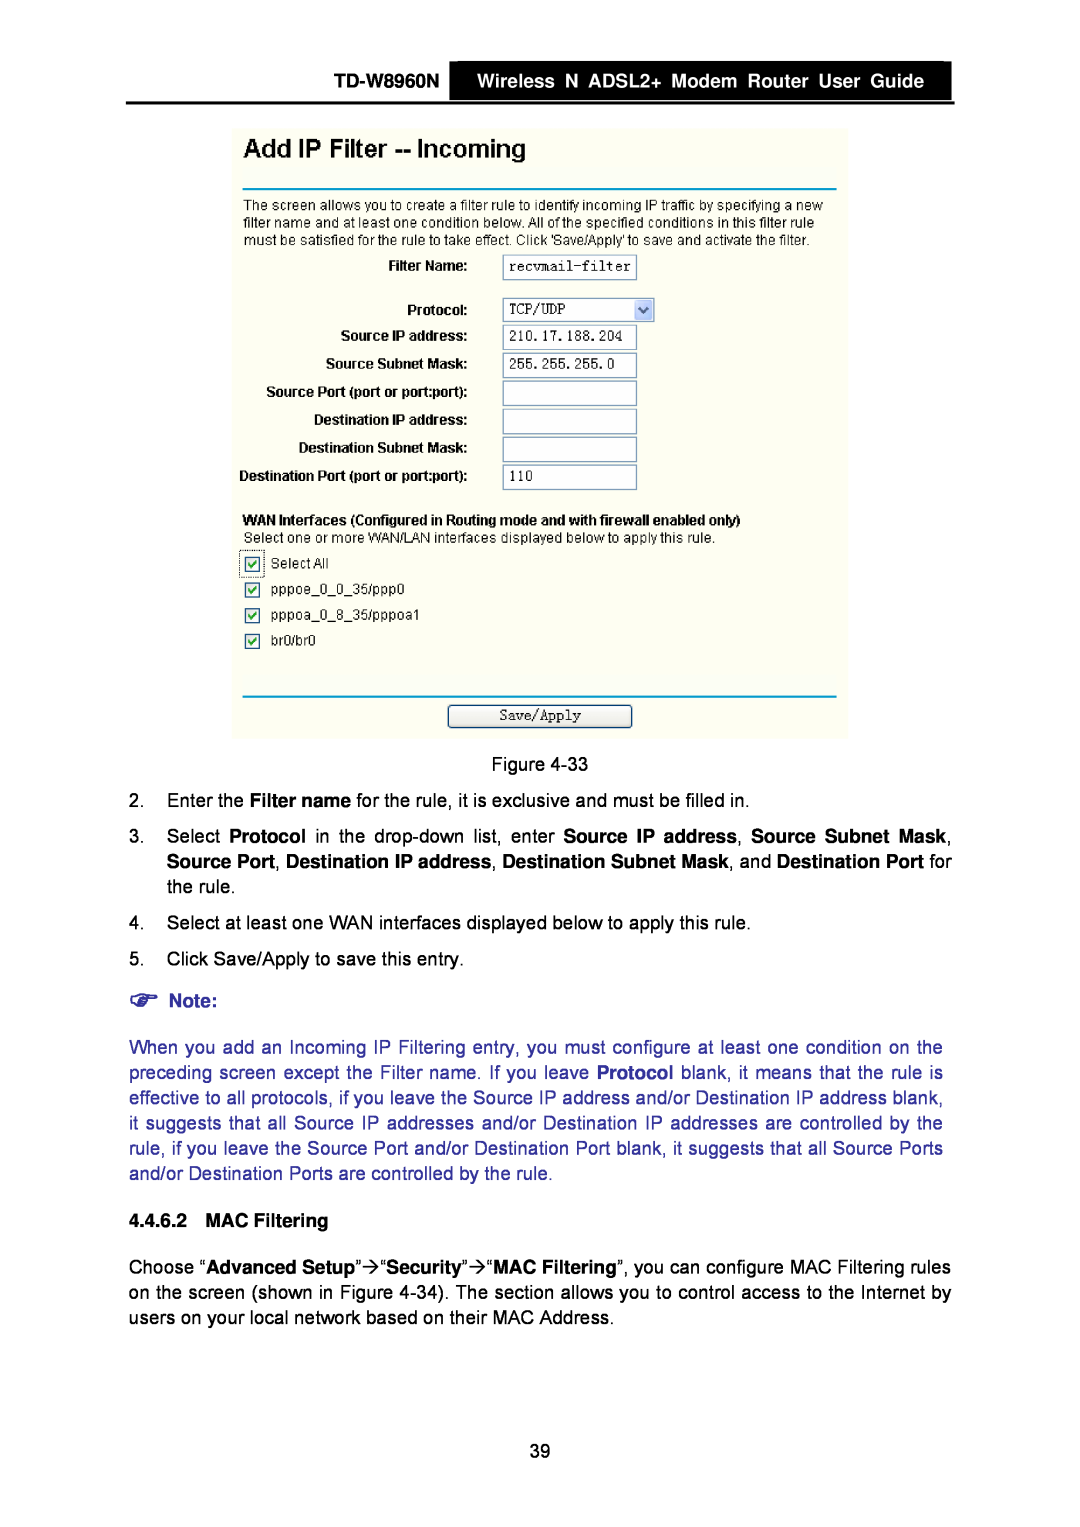 TP-Link manual TD-W8960N Wireless N ADSL2+ Modem Router User Guide, MAC Filtering 